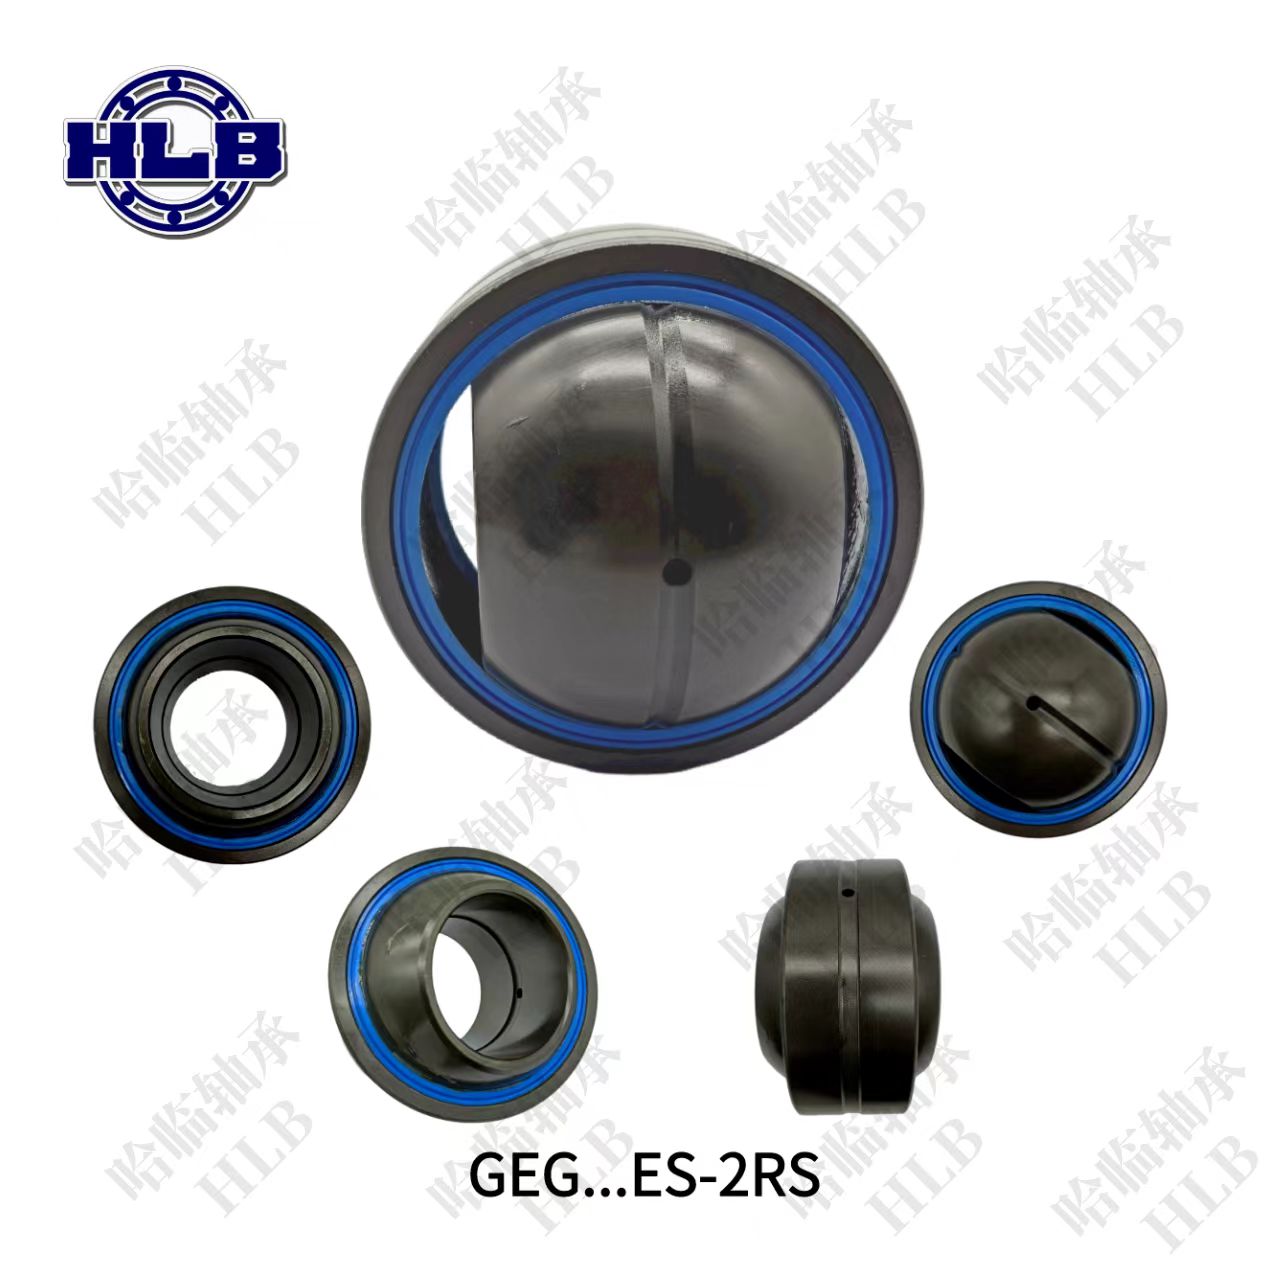 spherical plain bearing GEG...ES-2RS